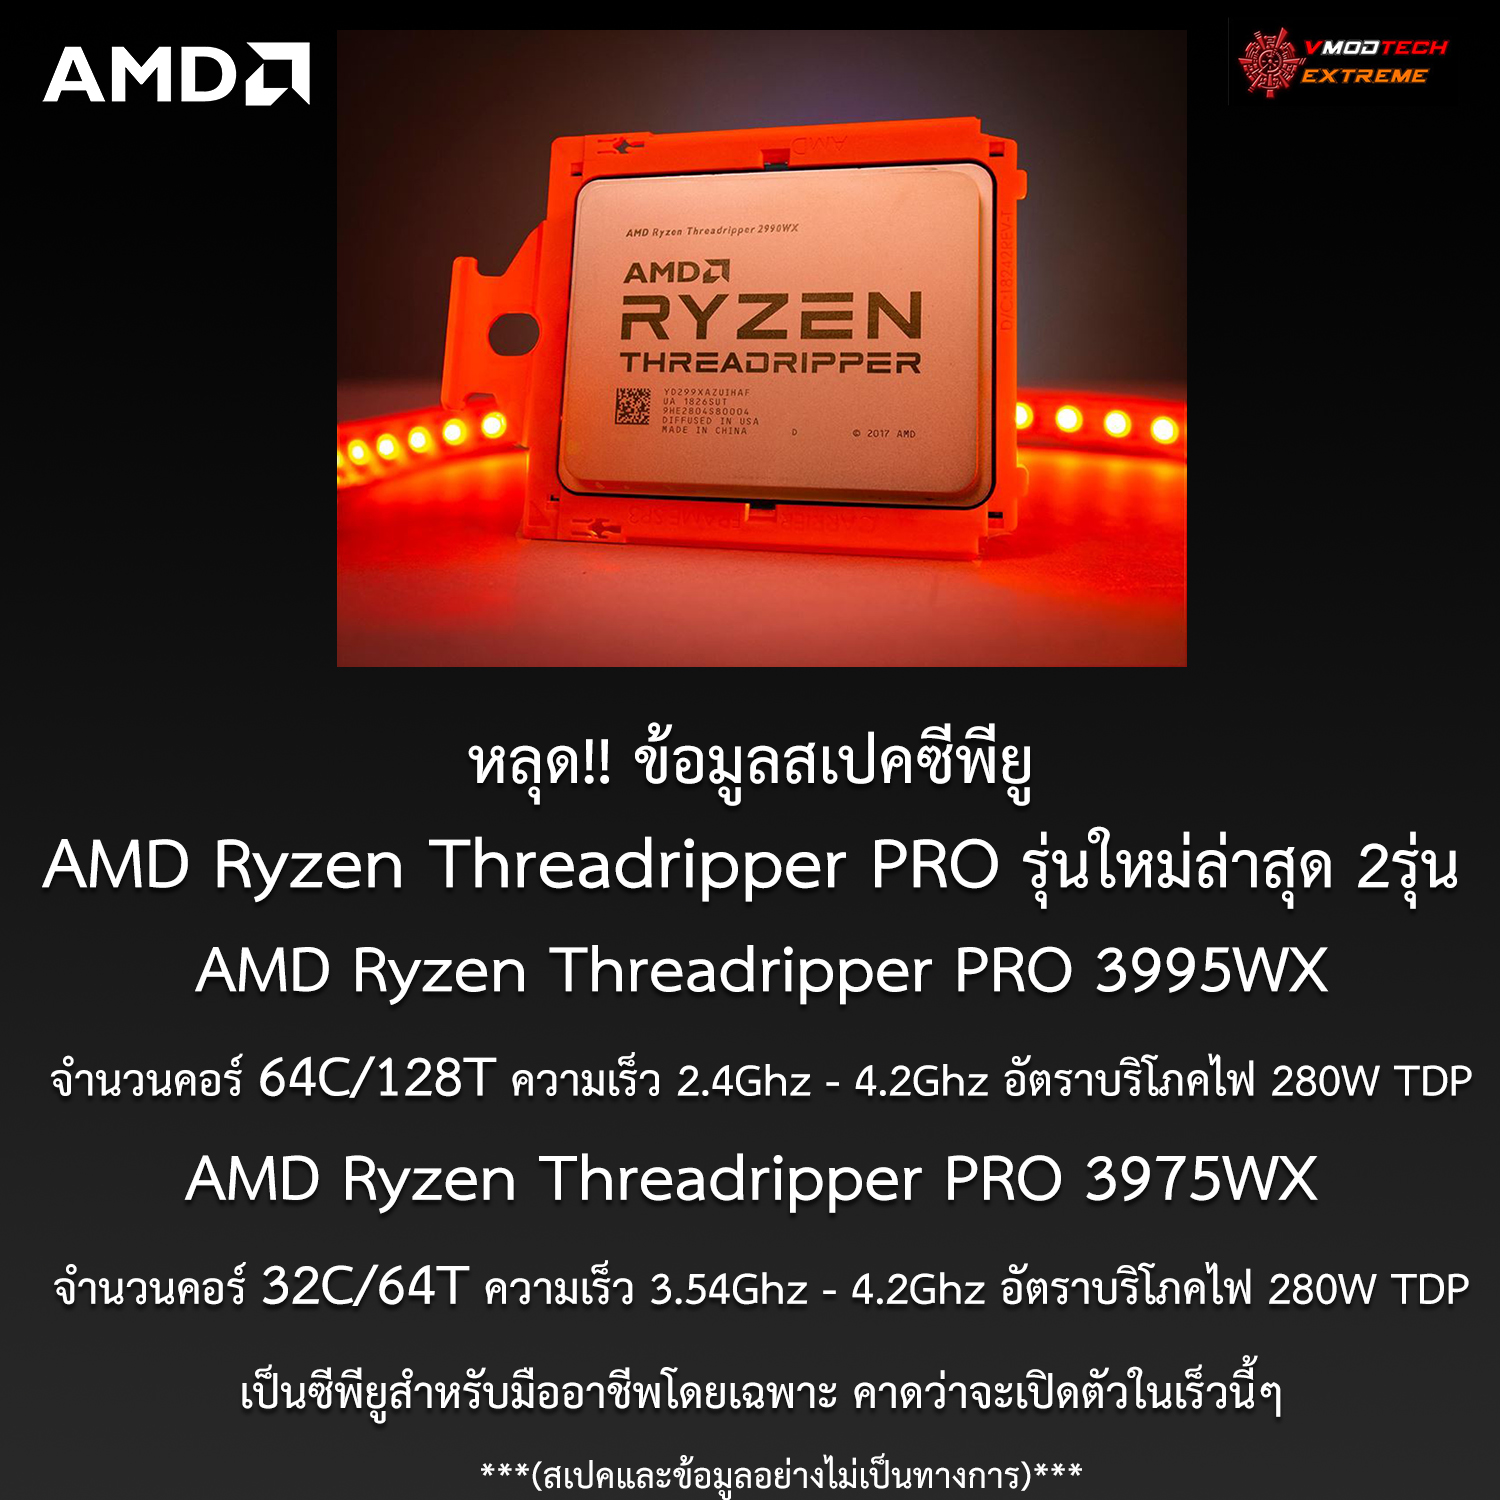 amd ryzen threadripper pro หลุด!! ข้อมูลสเปคซีพียู AMD Ryzen Threadripper PRO 3995WX และ 3975WX มีจำนวนคอร์มากถึง 64คอร์ 128เทรดกันเลยทีเดียว!!! 